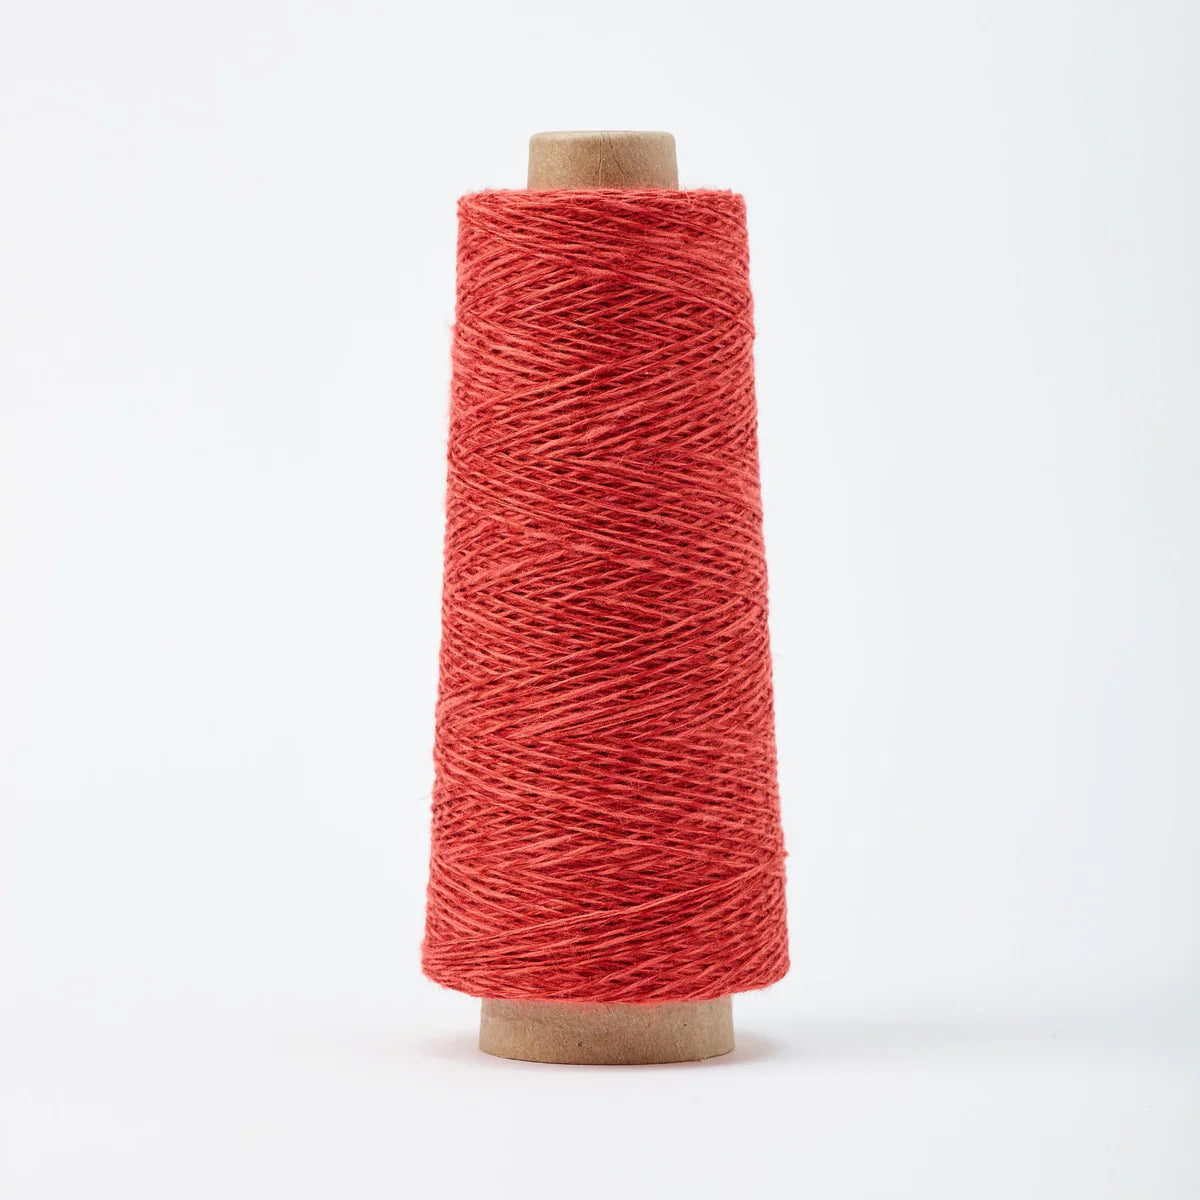 Gist Duet cotton linen yarn color Currant